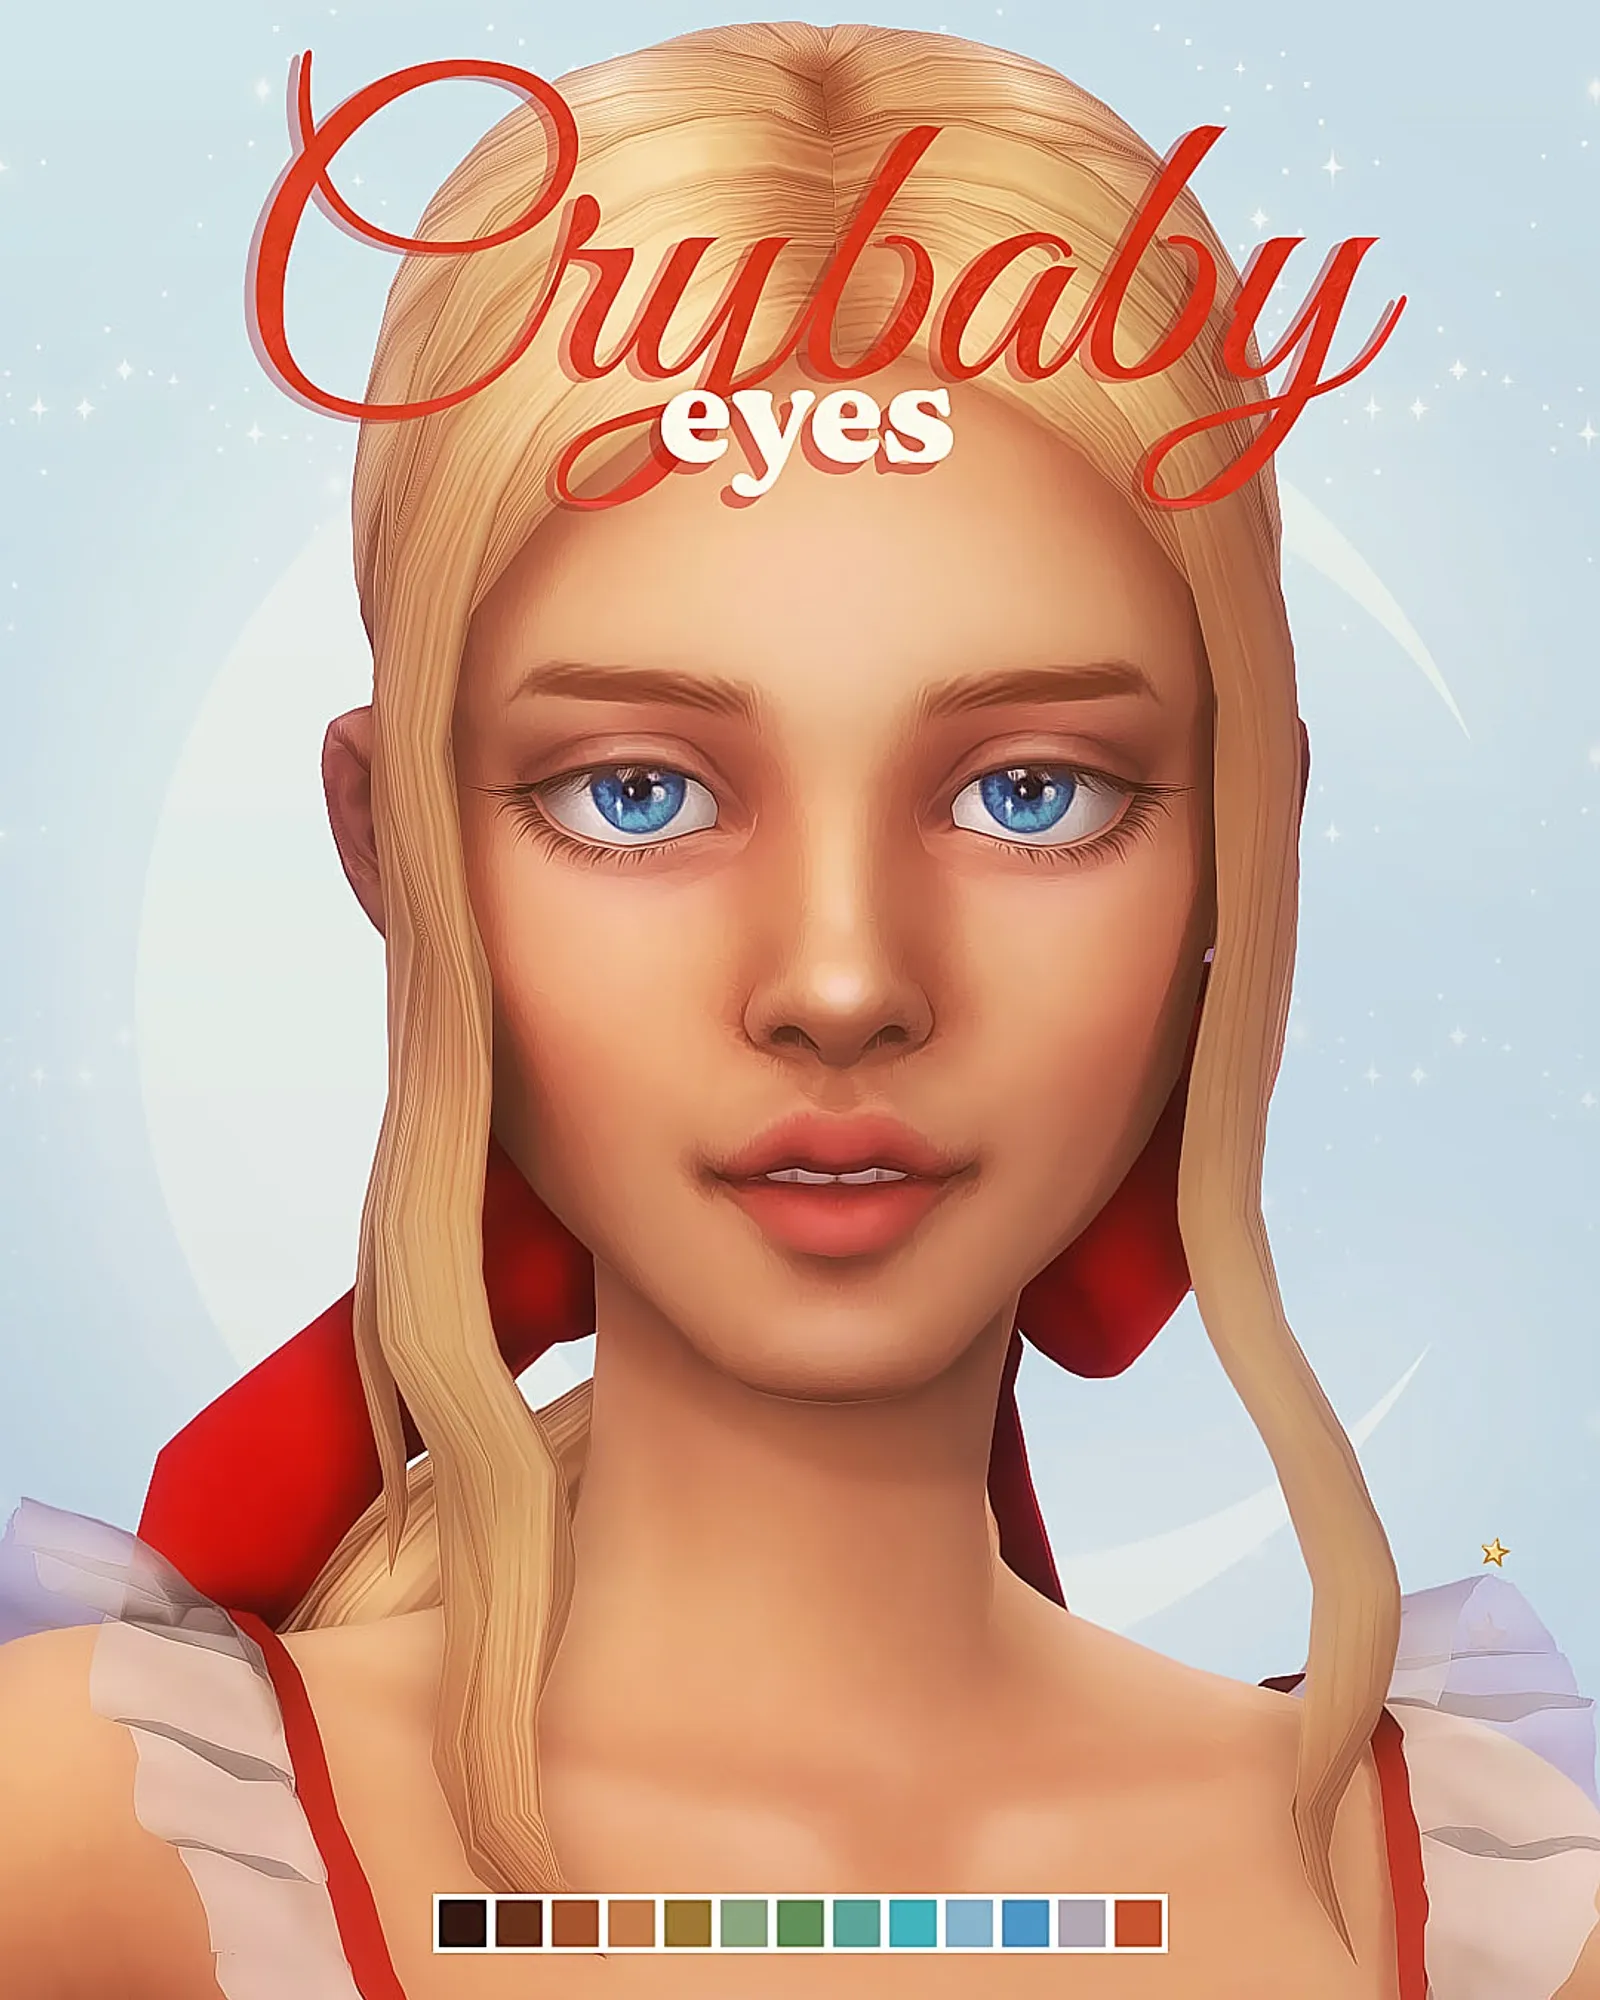 Crybaby eyes